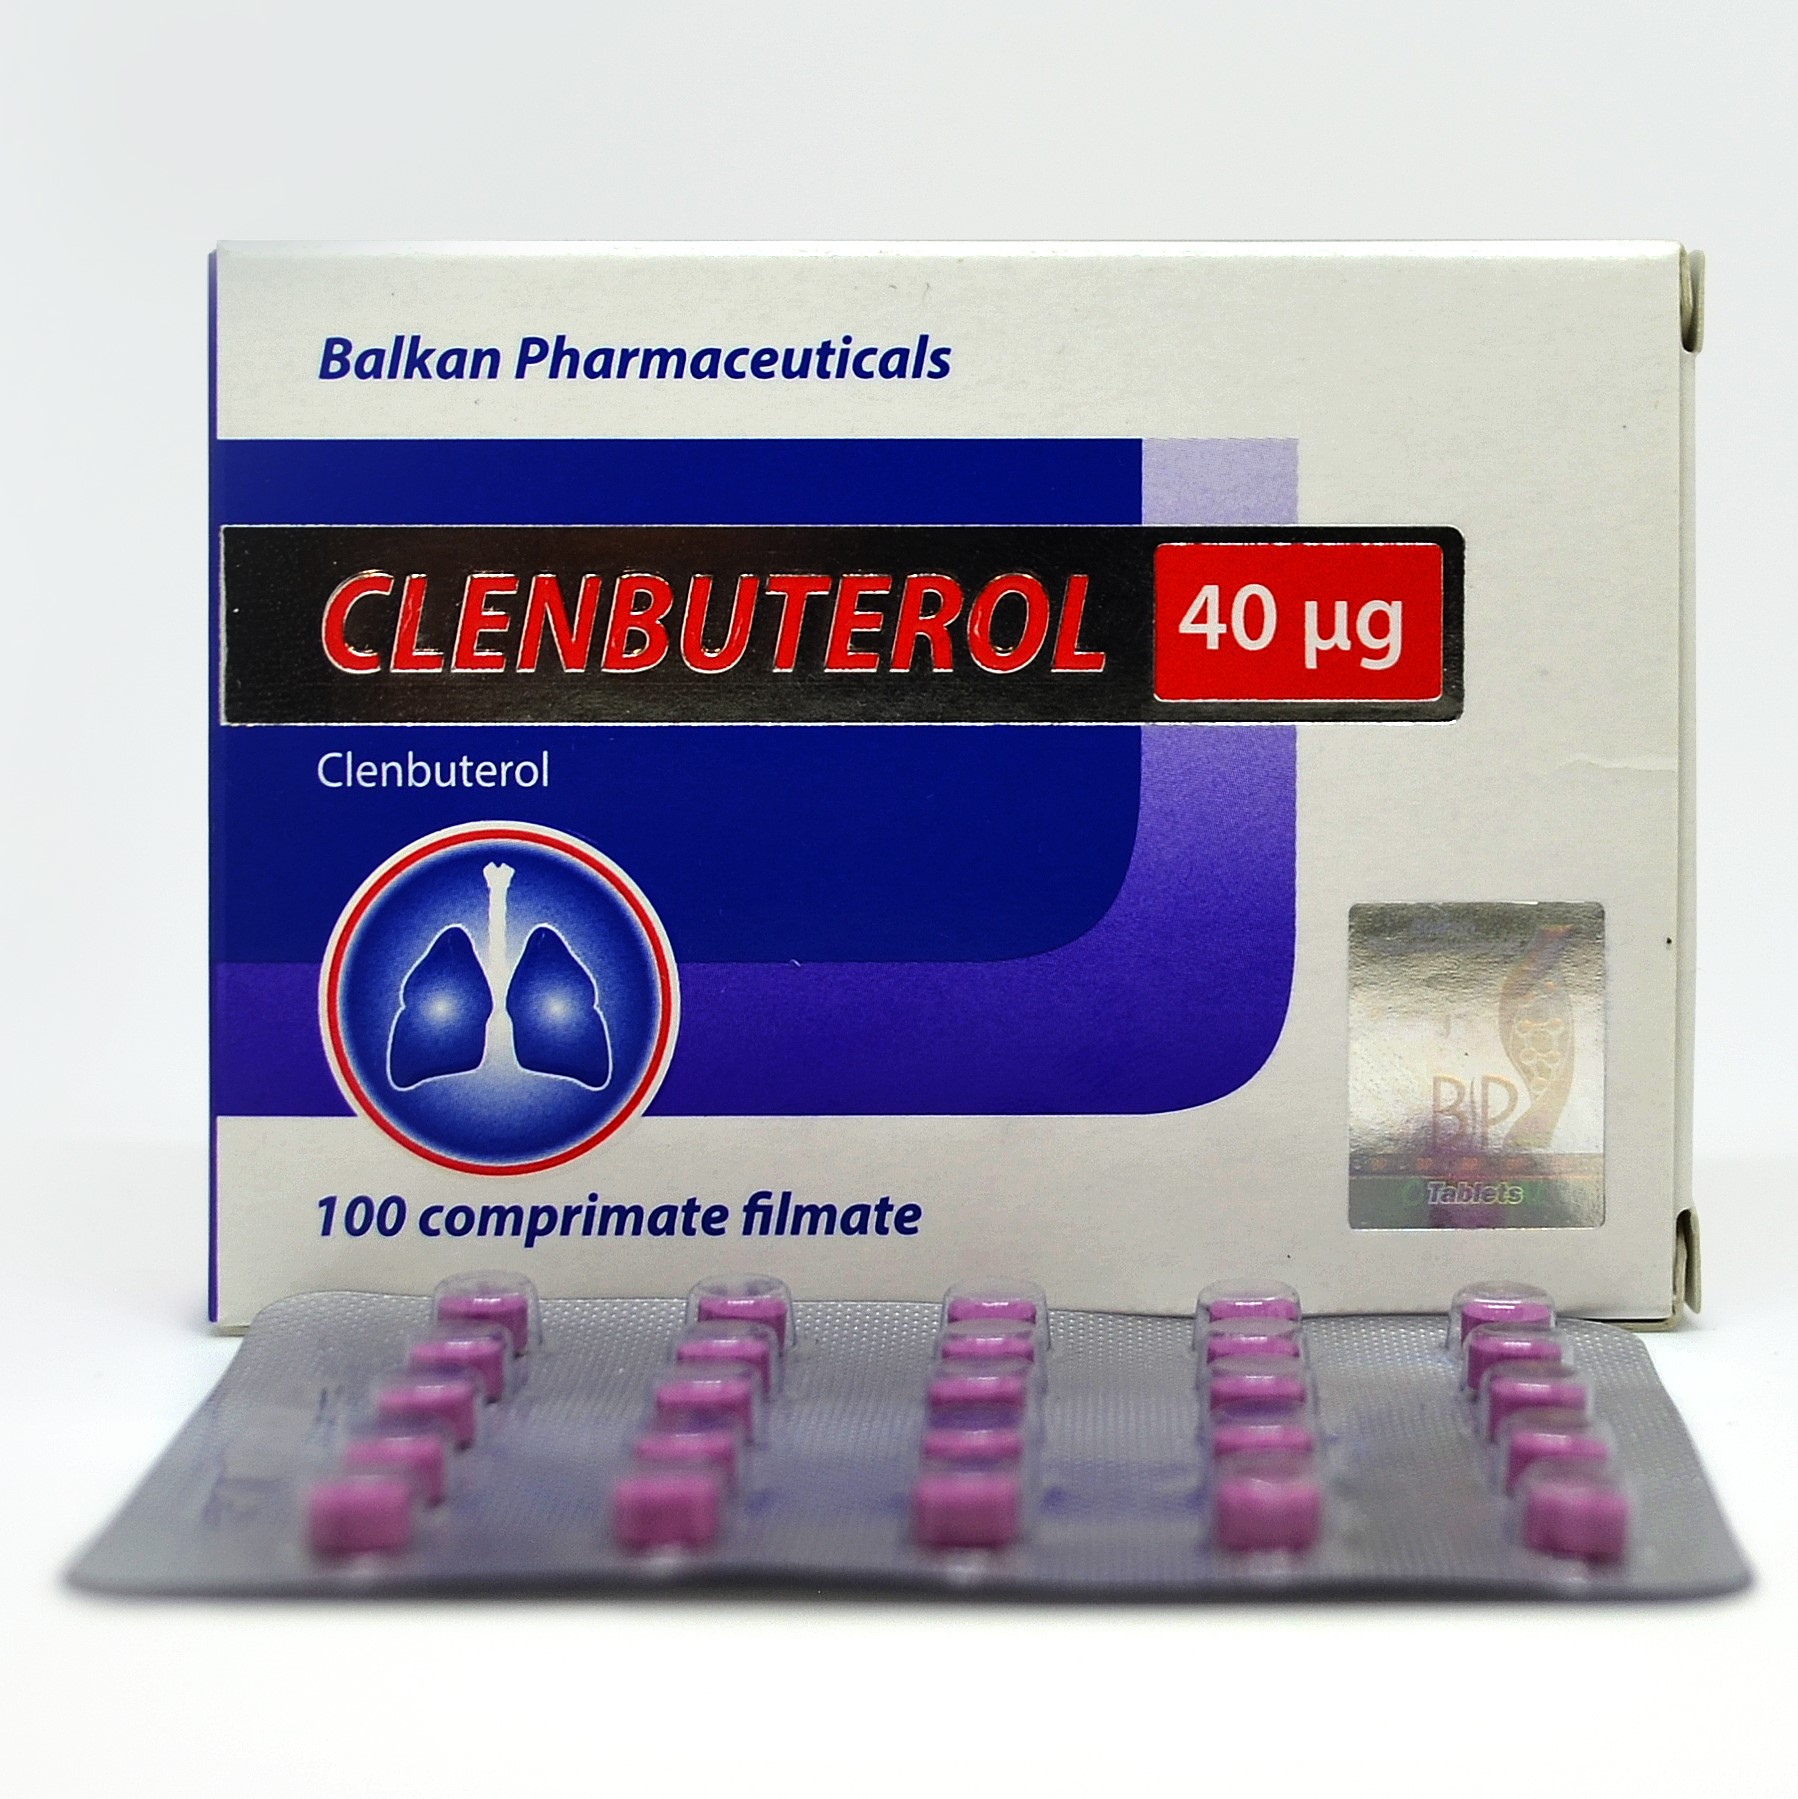 Balkan Pharmaceuticals Clenbuterol Review